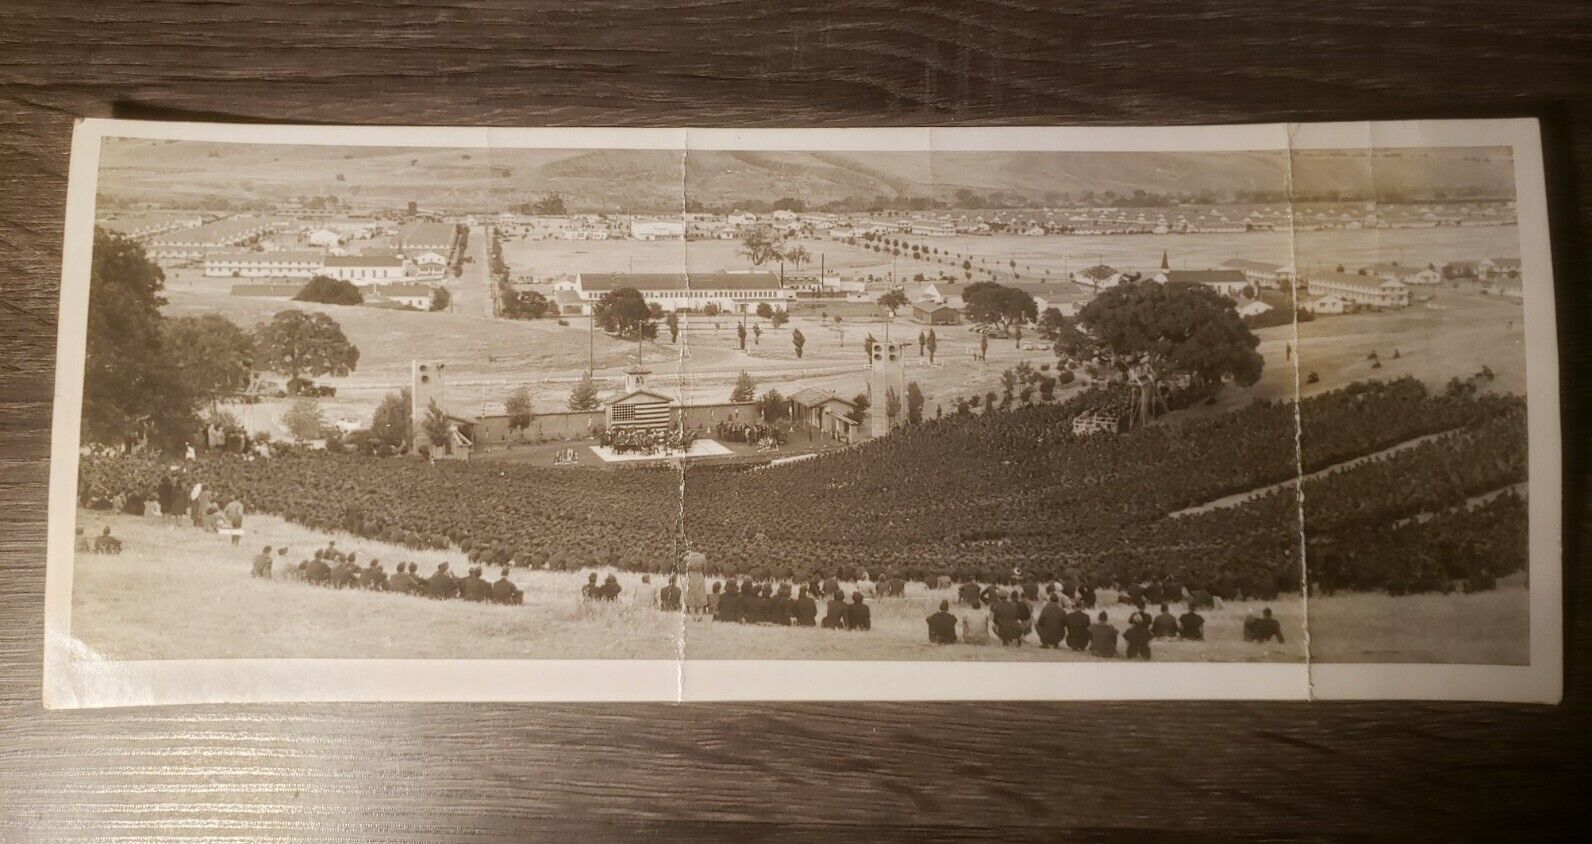 Rare Photo of 18,000 Men at Camp David Soldier\'s Bowl WW2 Panorama. 